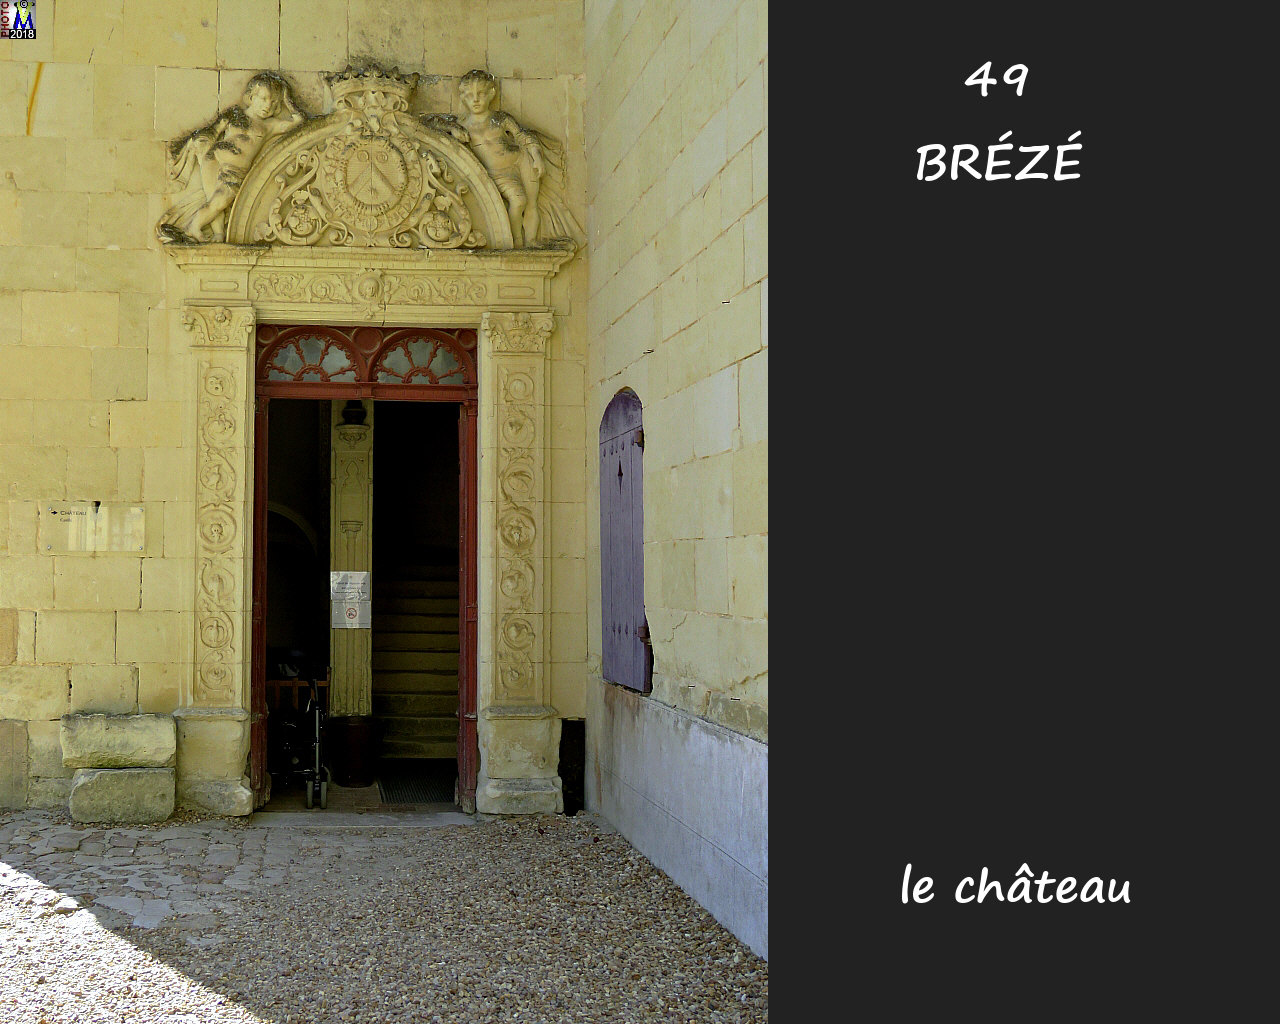 49BREZE_chateau_1058.jpg